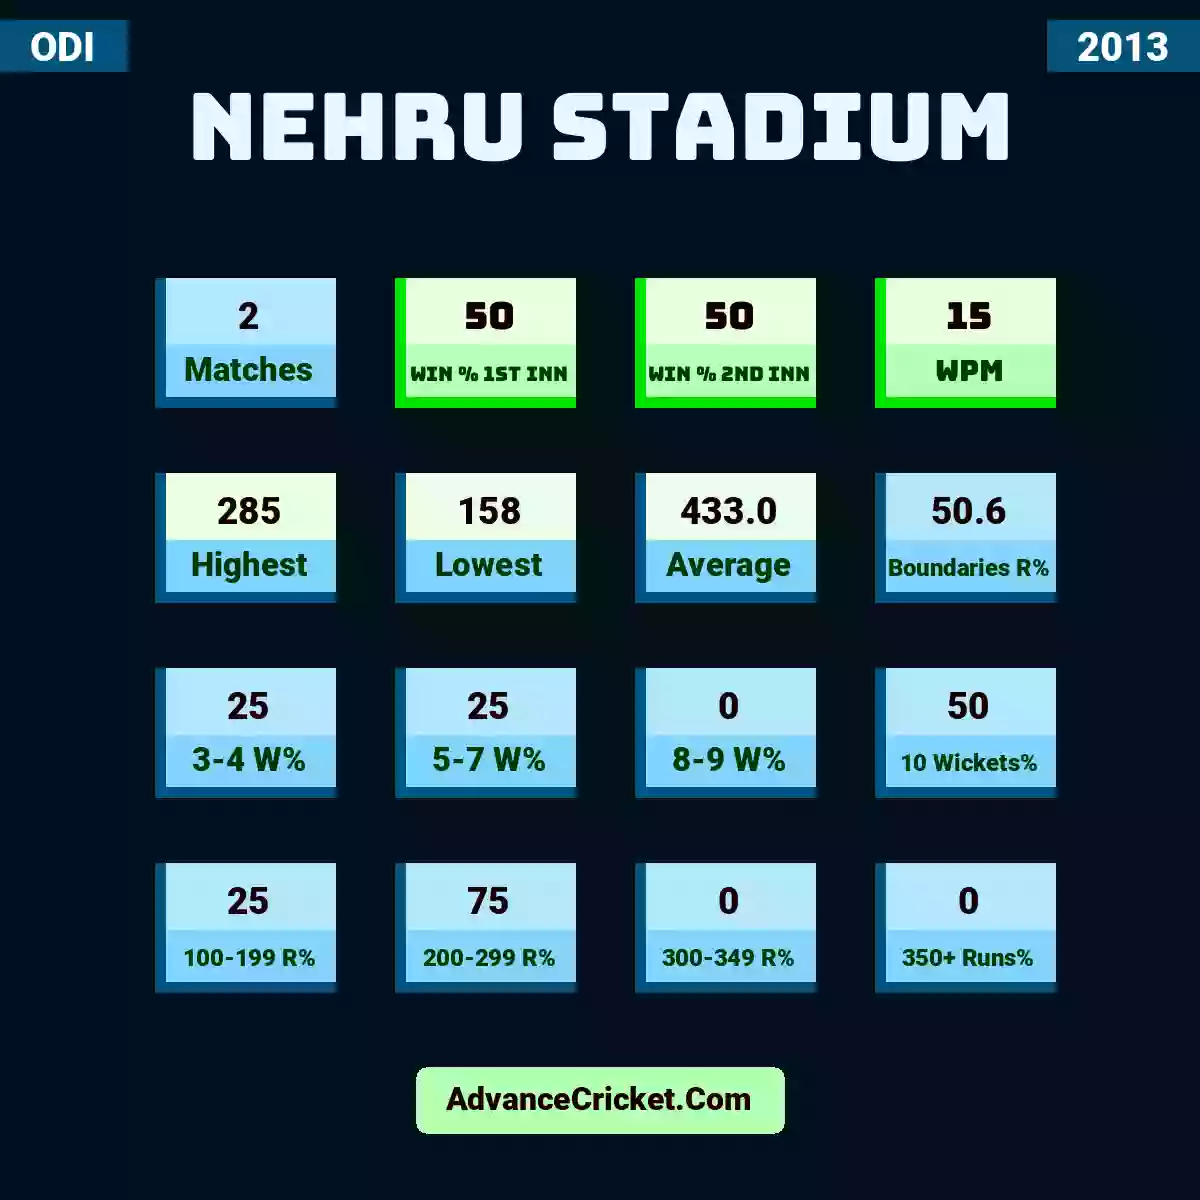 Image showing Nehru Stadium with Matches: 2, Win % 1st Inn: 50, Win % 2nd Inn: 50, WPM: 15, Highest: 285, Lowest: 158, Average: 433.0, Boundaries R%: 50.6, 3-4 W%: 25, 5-7 W%: 25, 8-9 W%: 0, 10 Wickets%: 50, 100-199 R%: 25, 200-299 R%: 75, 300-349 R%: 0, 350+ Runs%: 0.